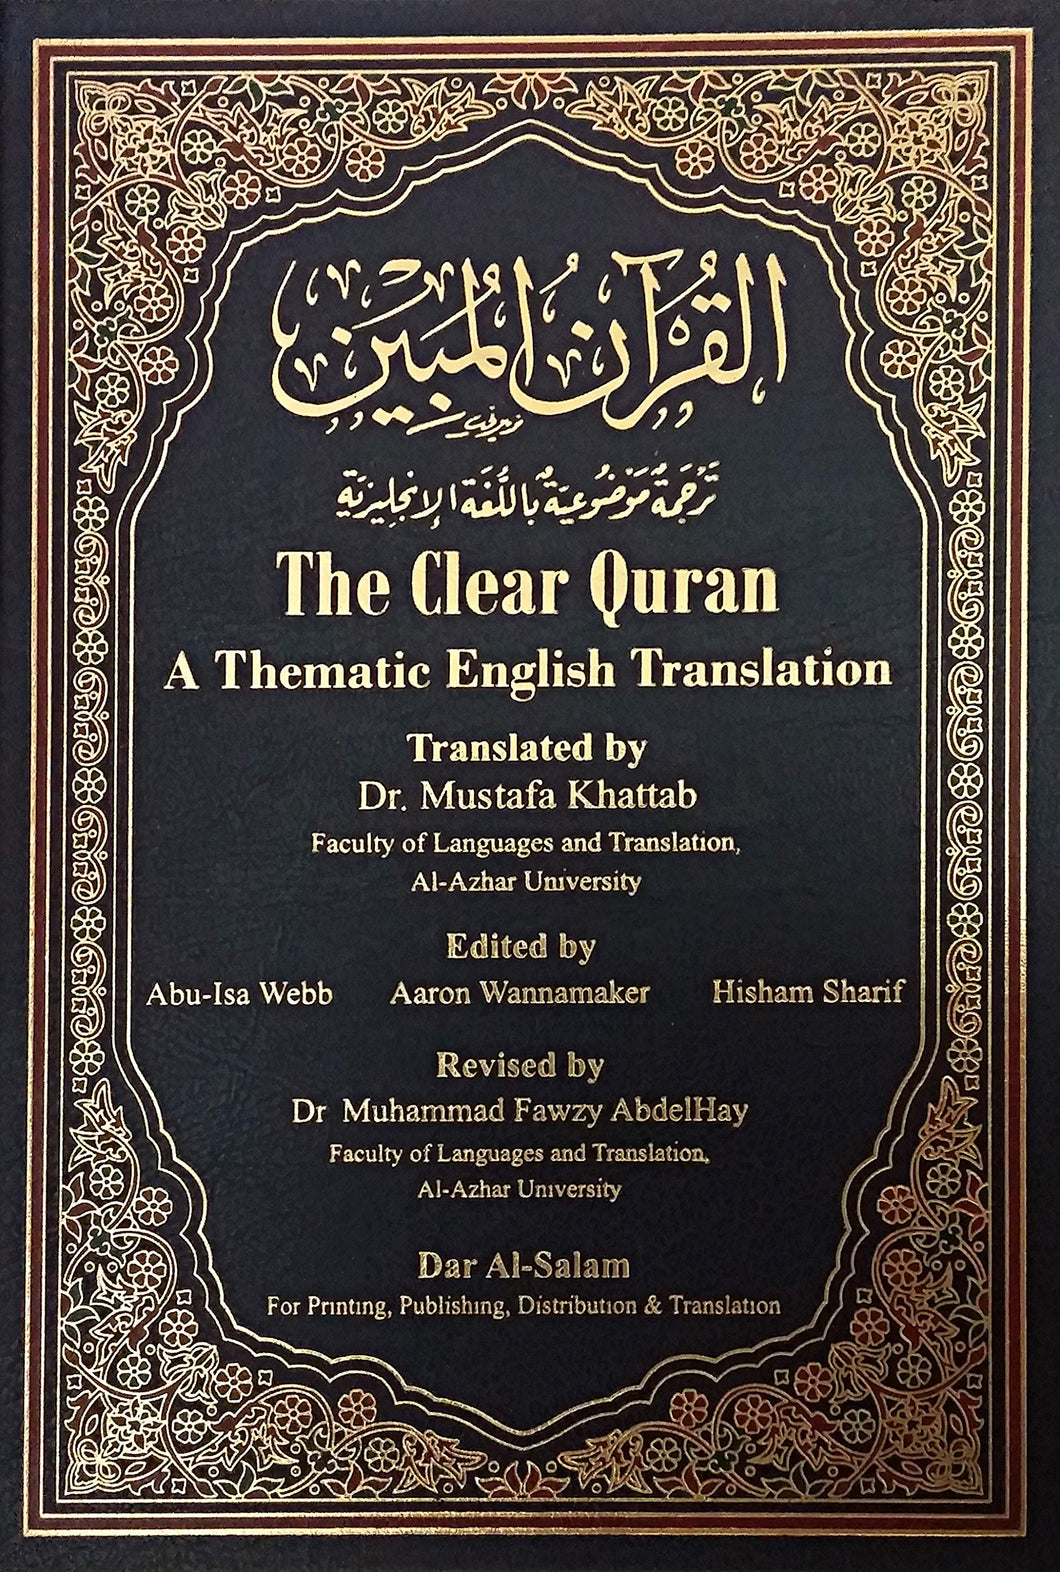 The Clear Quran [Arabic-English] A Thematic English Translation